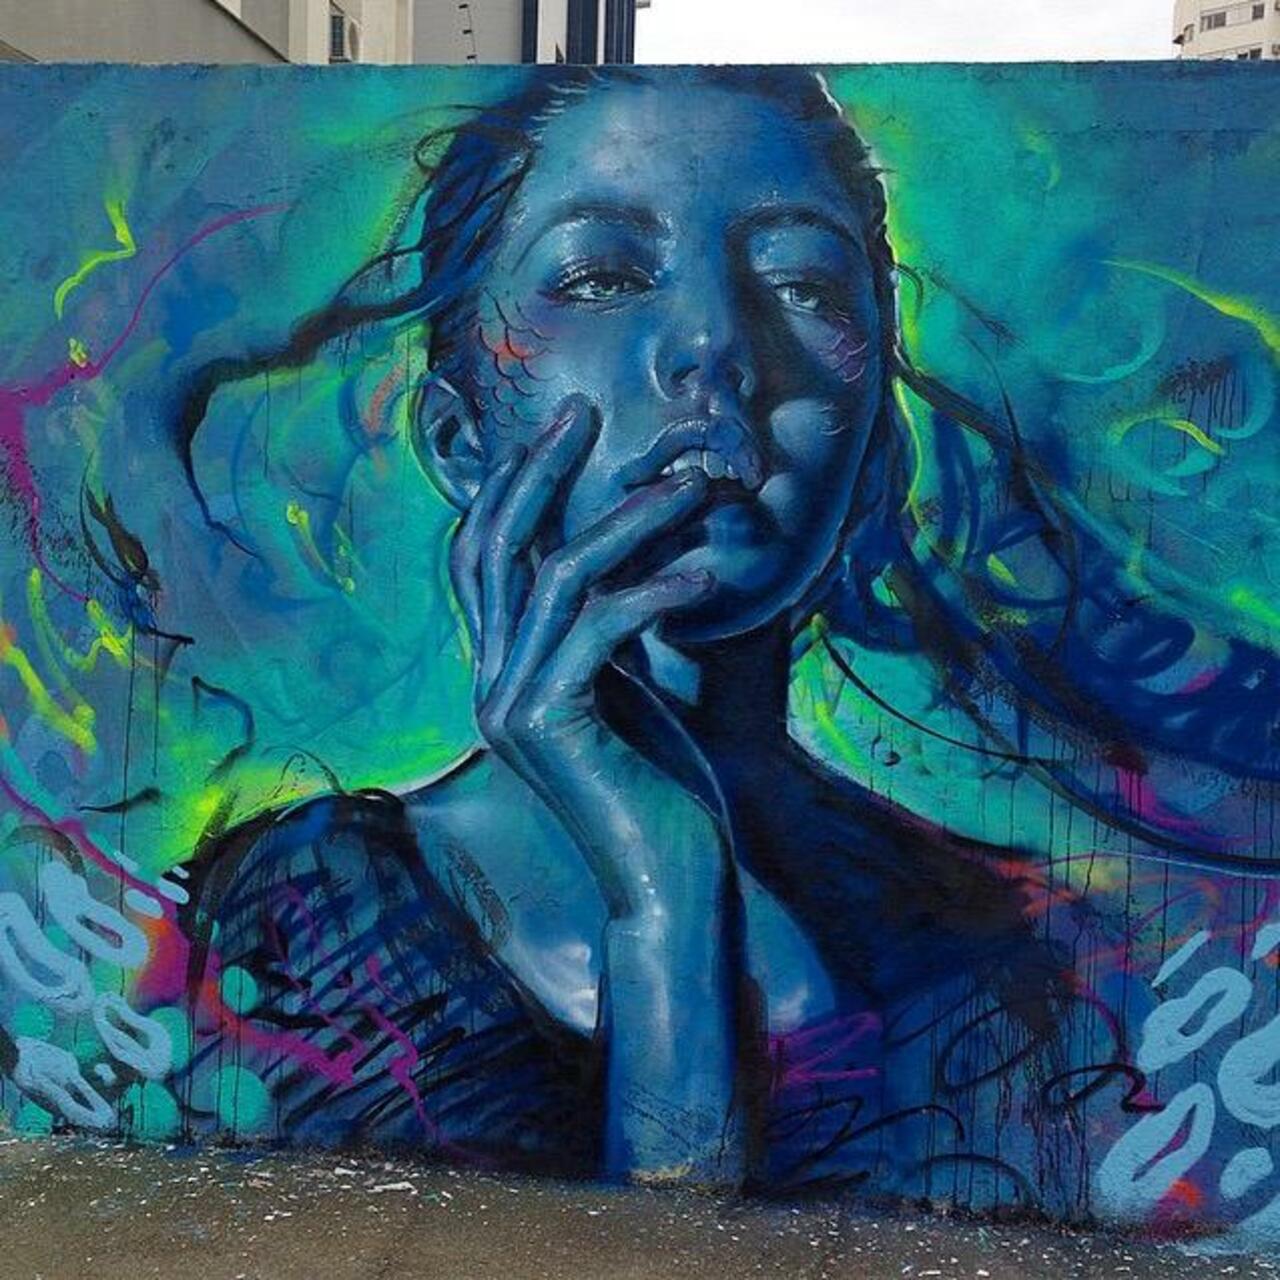 Thiago Valdi new Street Art piece titled 'Day Dreamer'

#art #mural #graffiti #streetart http://t.co/XCUmUN9OWj